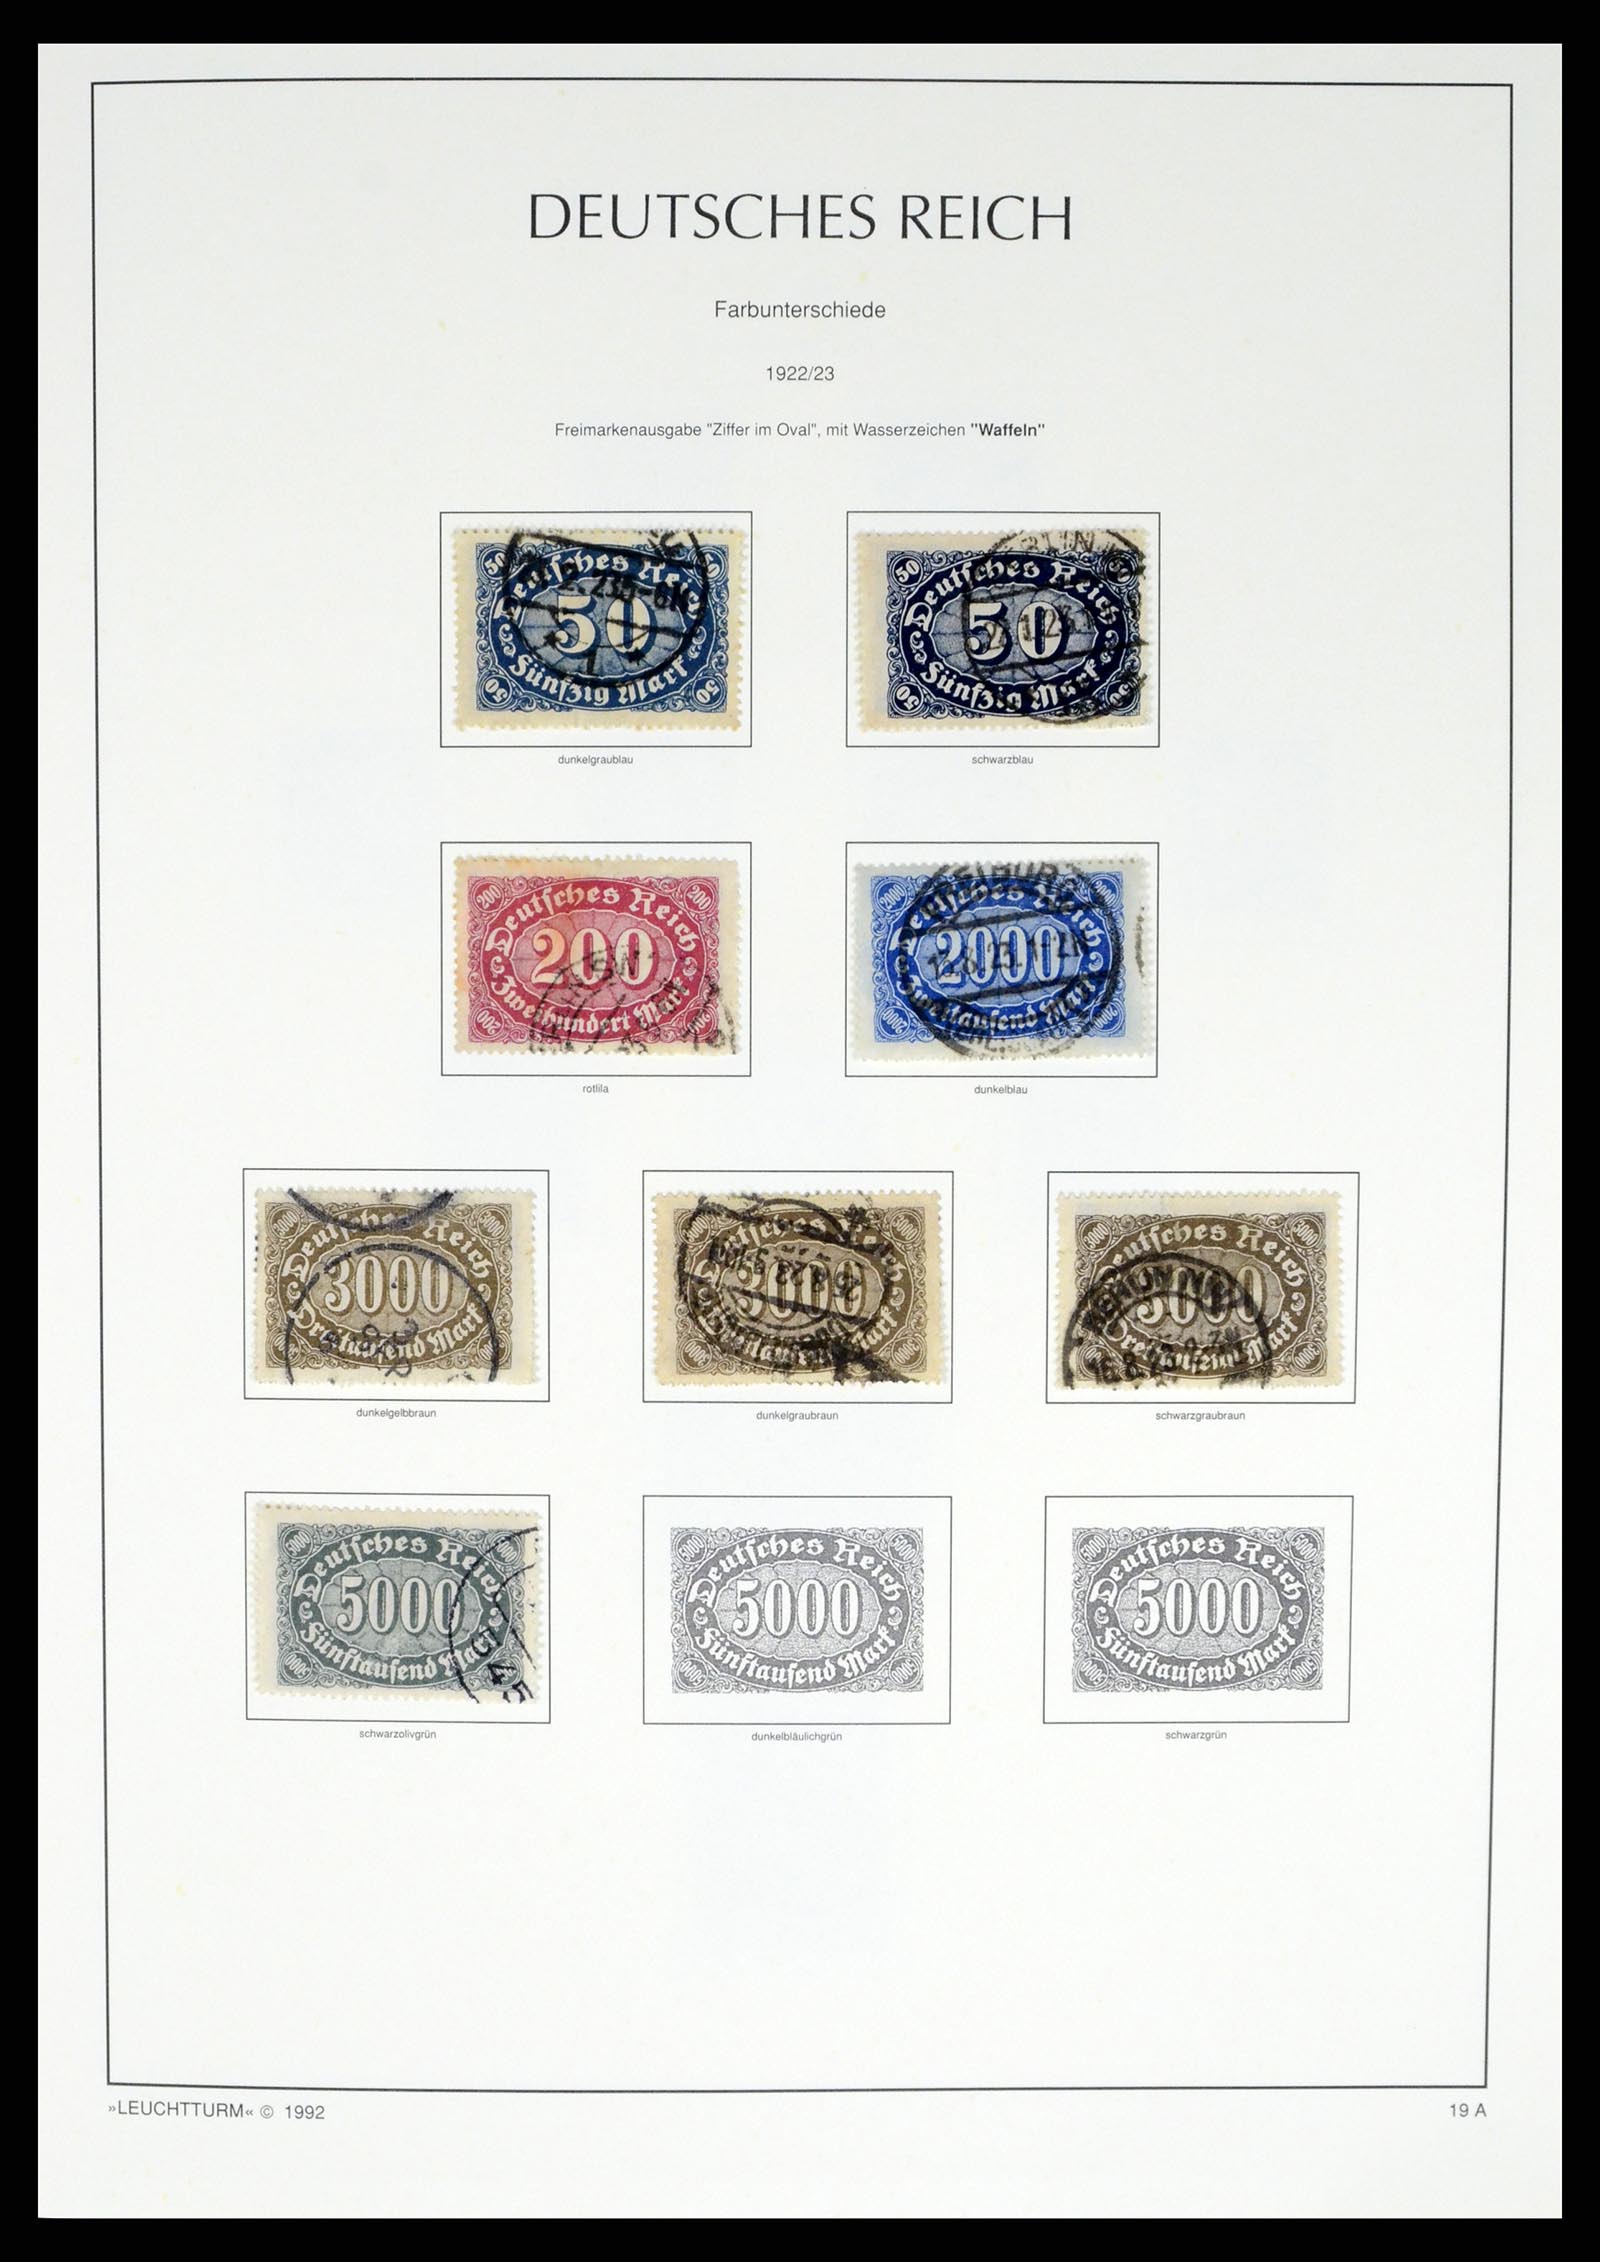 37497 037 - Stamp collection 37497 German Reich 1872-1945.